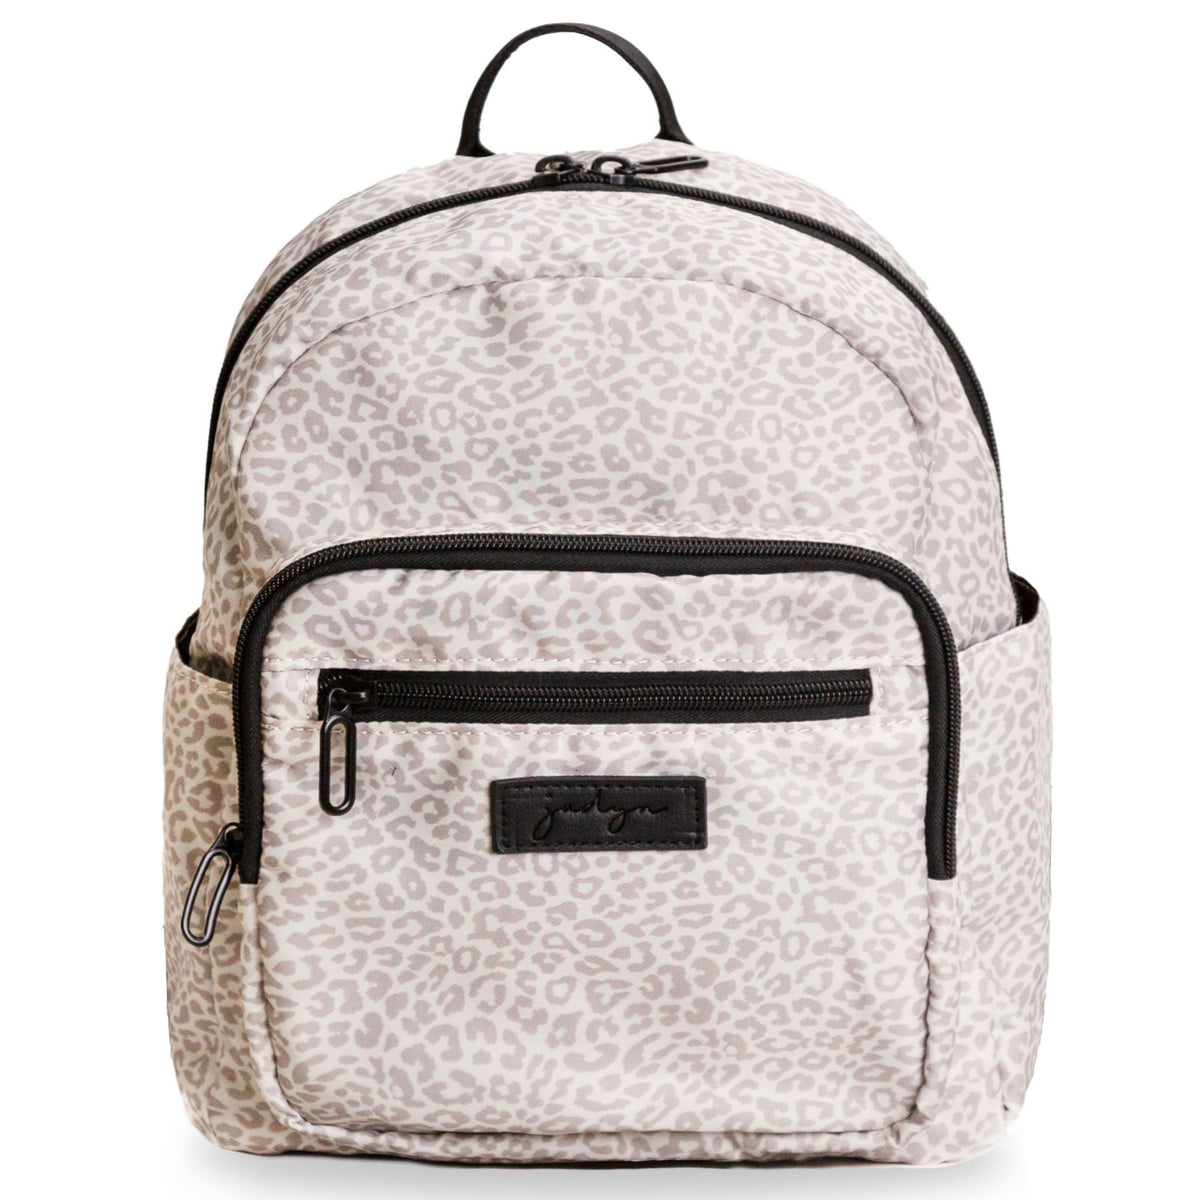  Jadyn Mini Backpack for Women, Small Backpack Purse